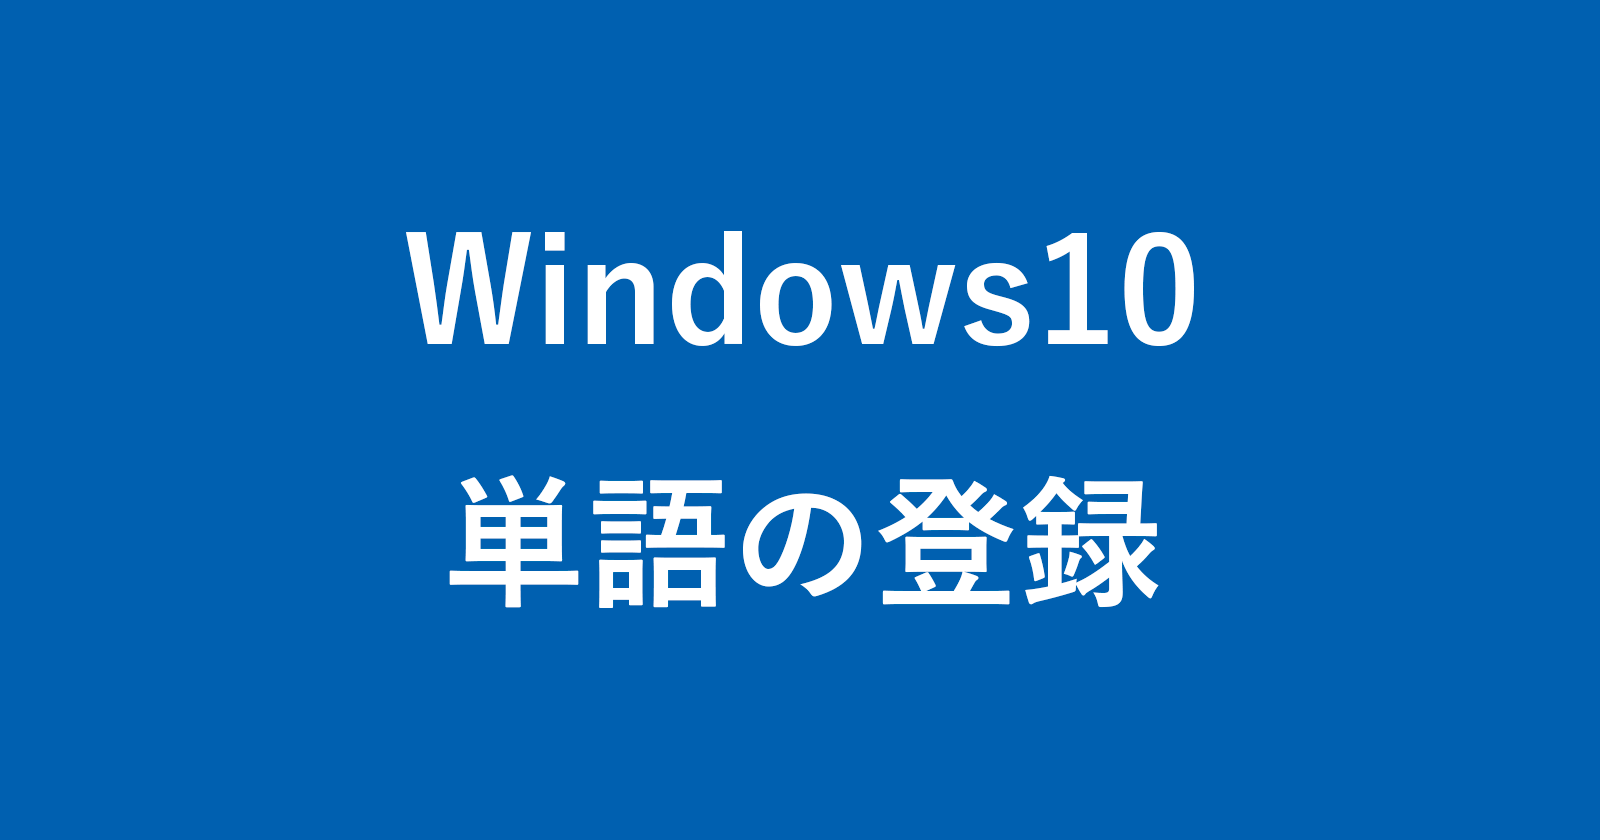 windows 10 ime registar words